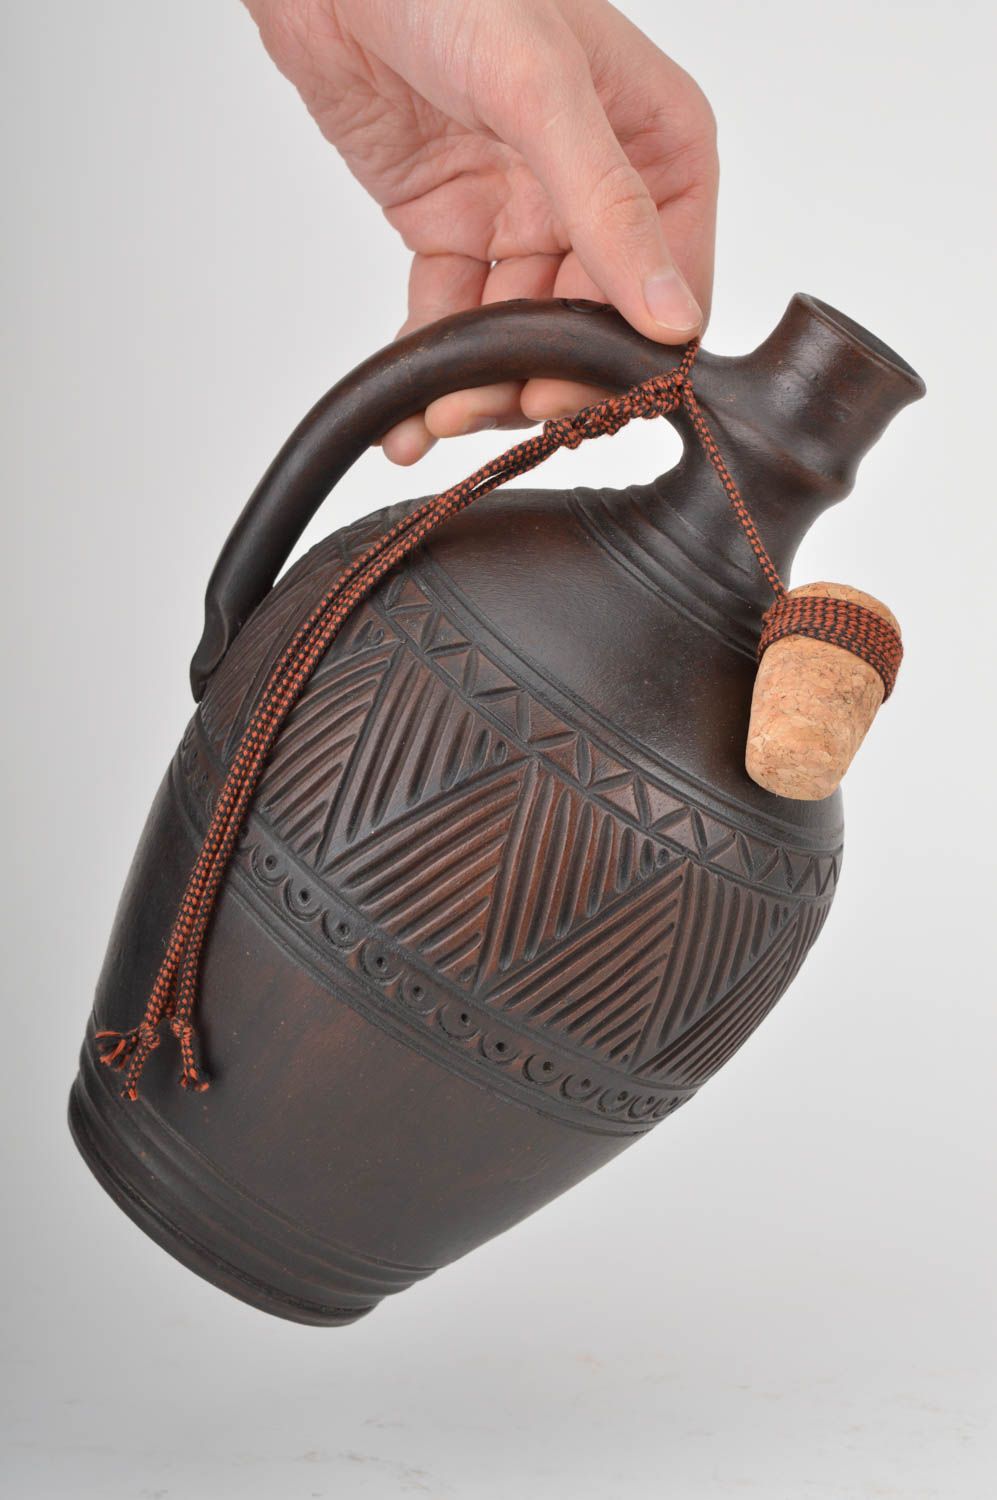 Botella de cerámica con corcho de madera cubierta con leche artesanal 2 litros  foto 3